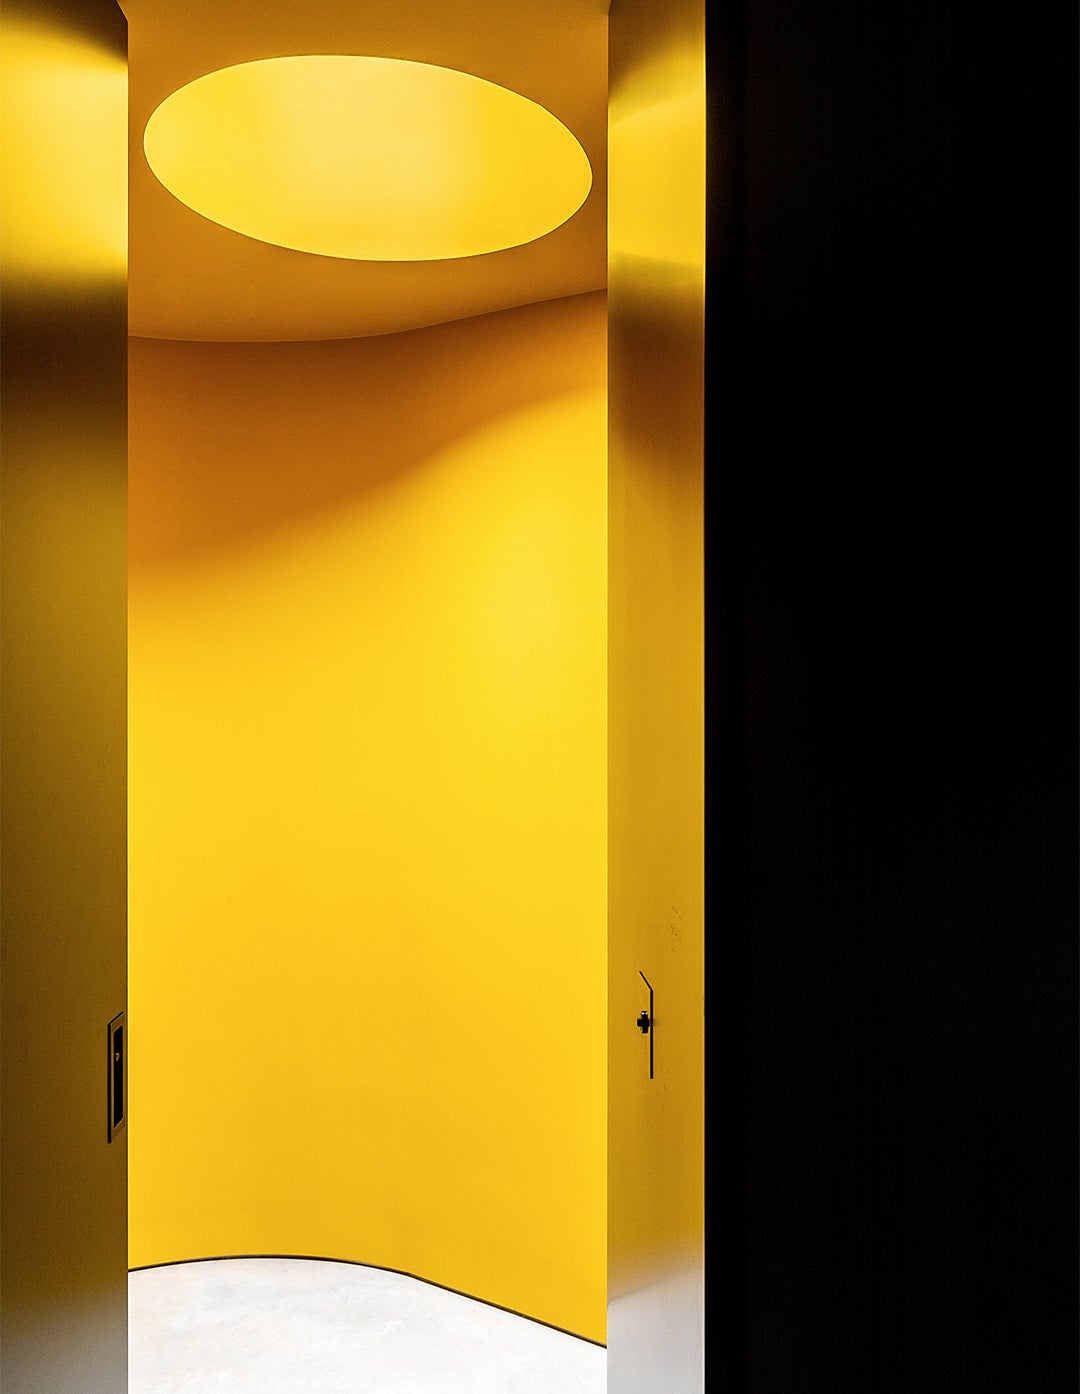 skylihgt in yellow bathroom